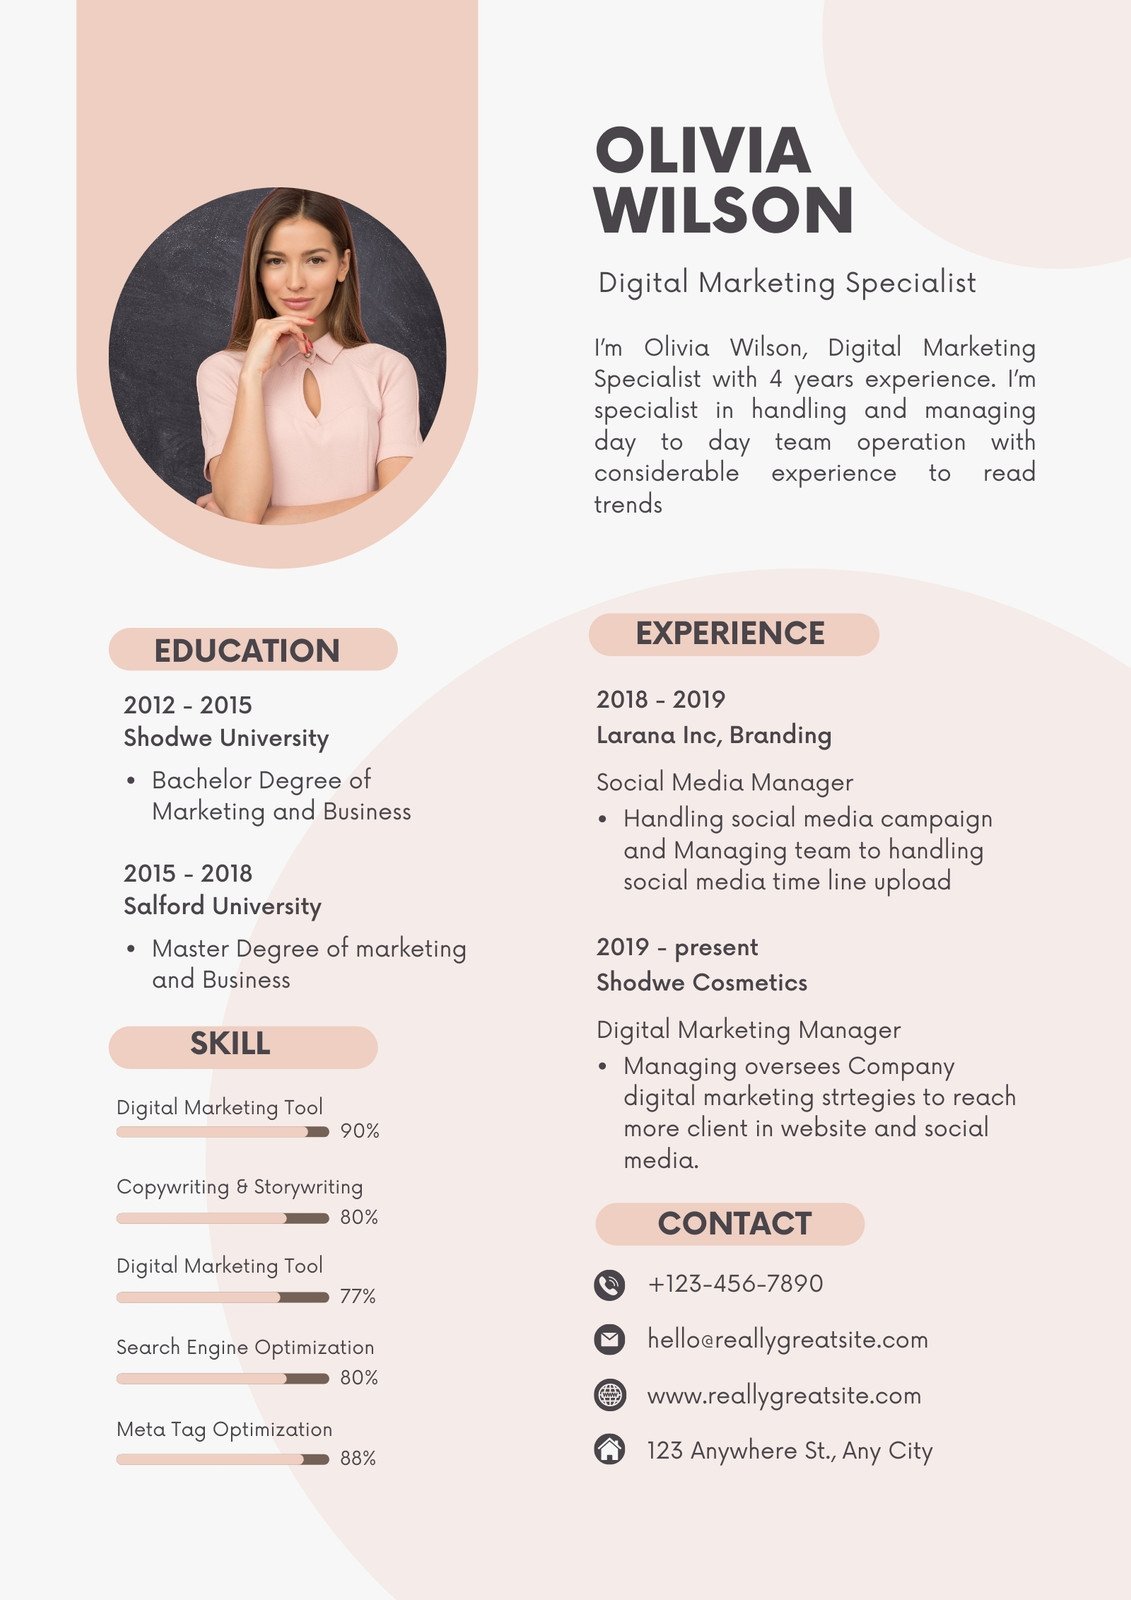 https://marketplace.canva.com/EAE9JeOMzxo/1/0/1131w/canva-white-modern-digital-marketing-specialist-resume-R4HDUd451-g.jpg